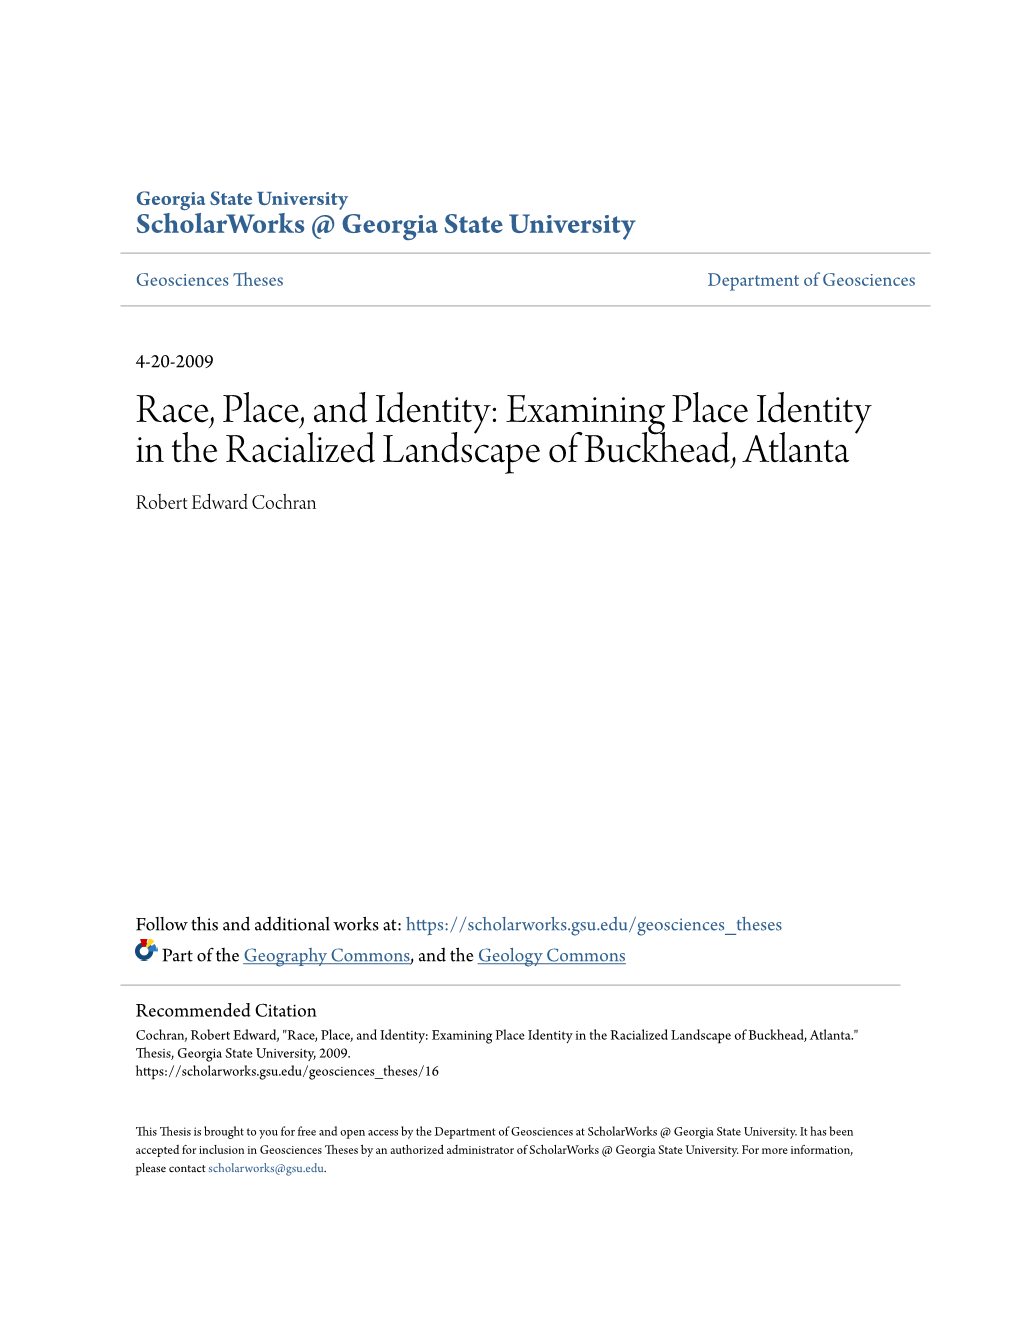 Examining Place Identity in the Racialized Landscape of Buckhead, Atlanta Robert Edward Cochran